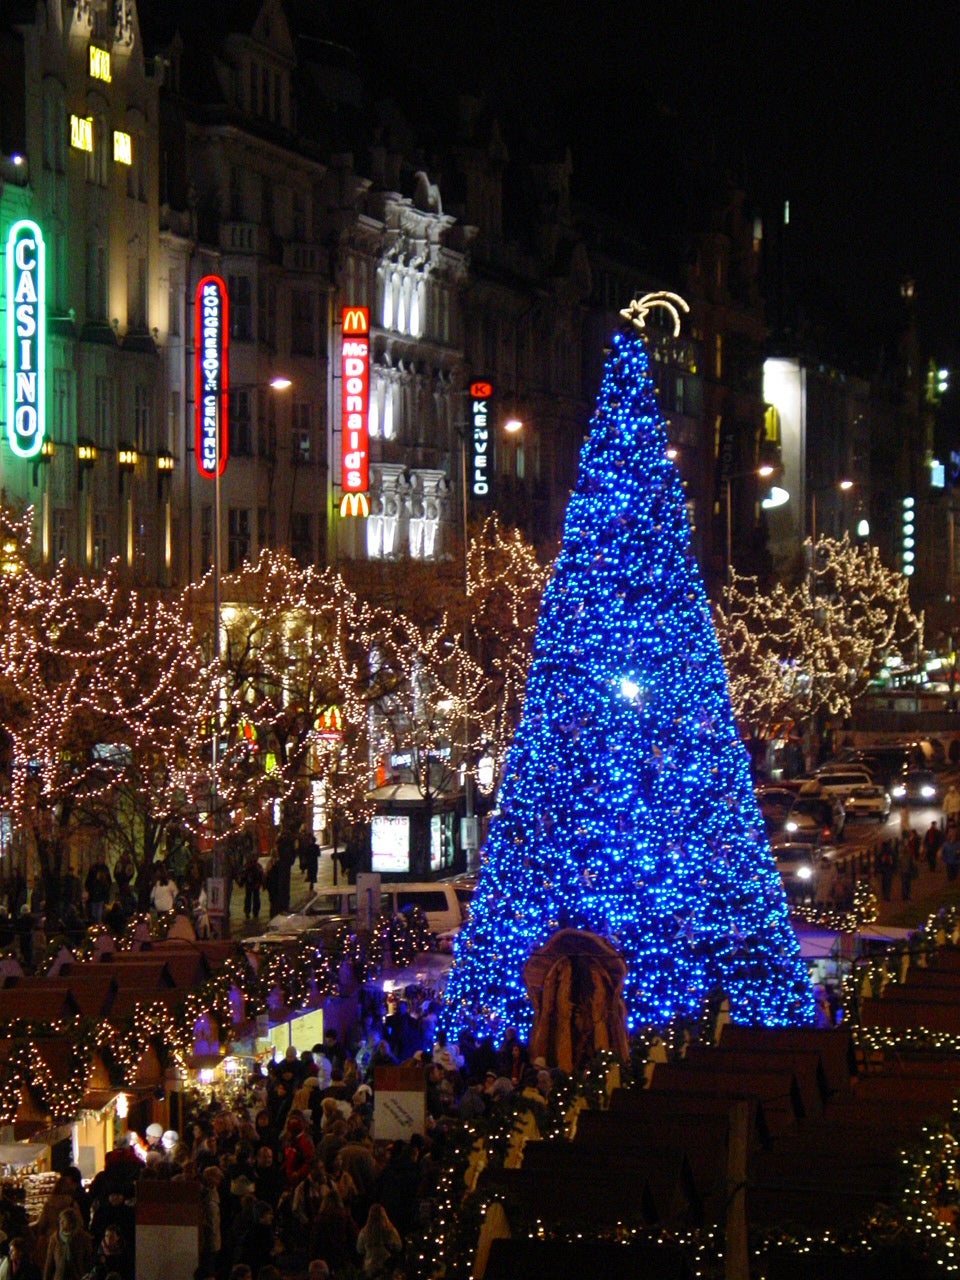 Wenceslas Square’s Christmas market transforms the heart of Prague